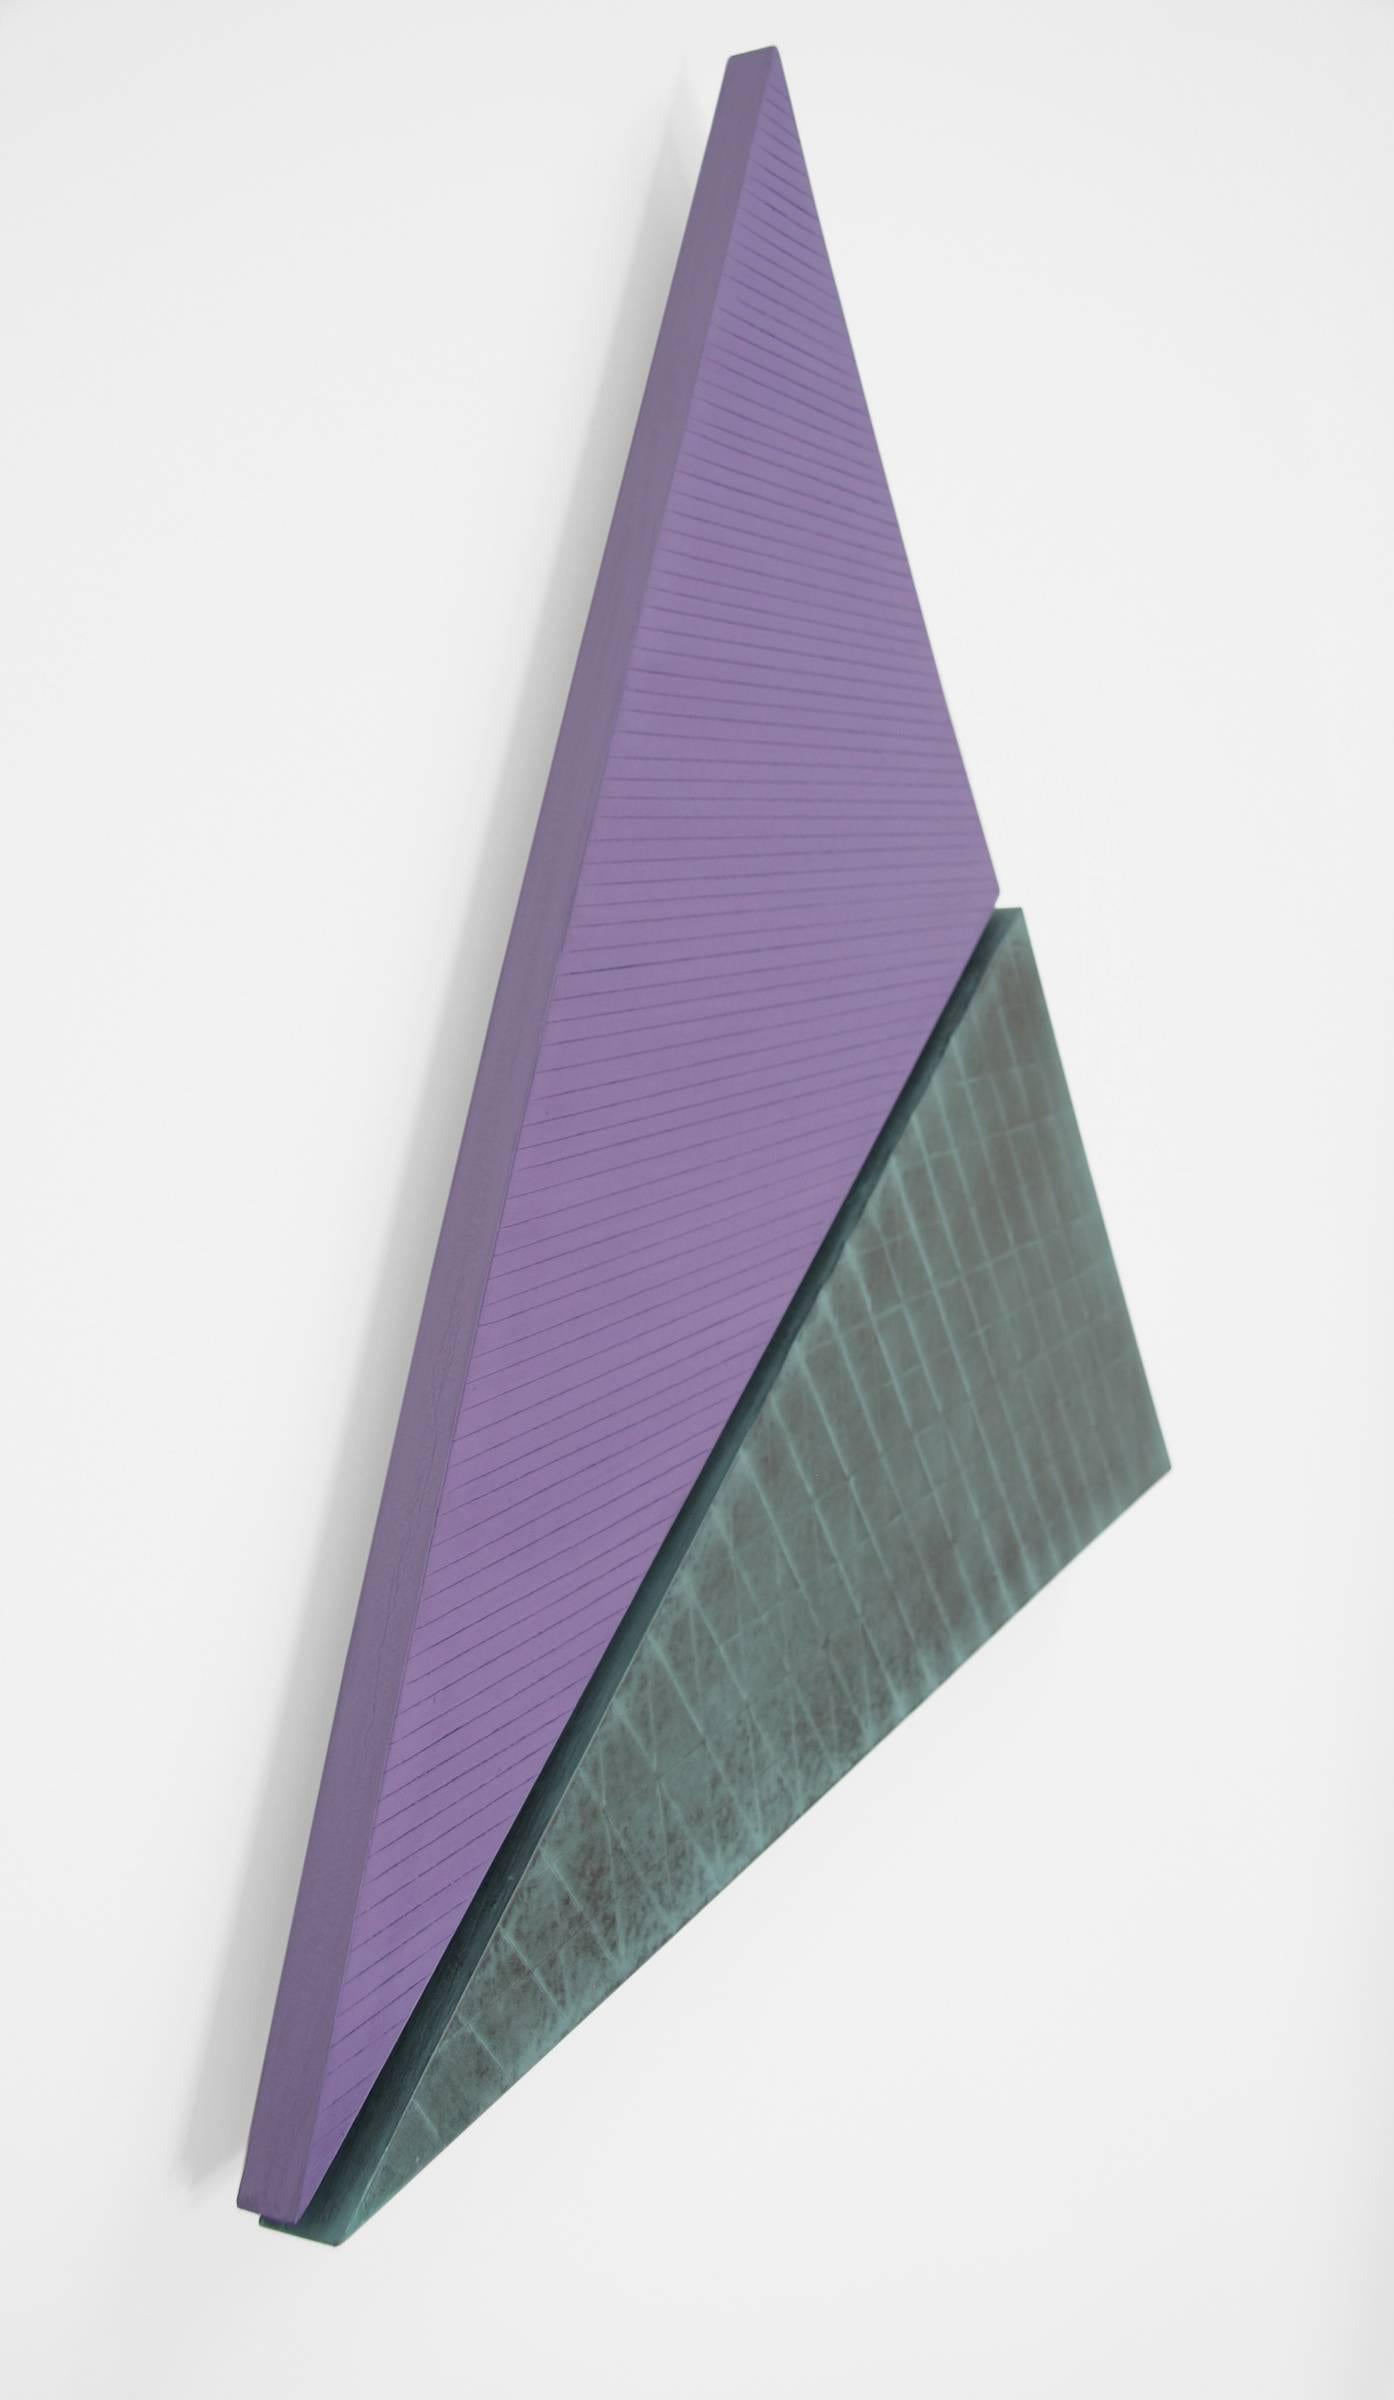 Bend - Abstract Geometric Sculpture by Blinn Jacobs